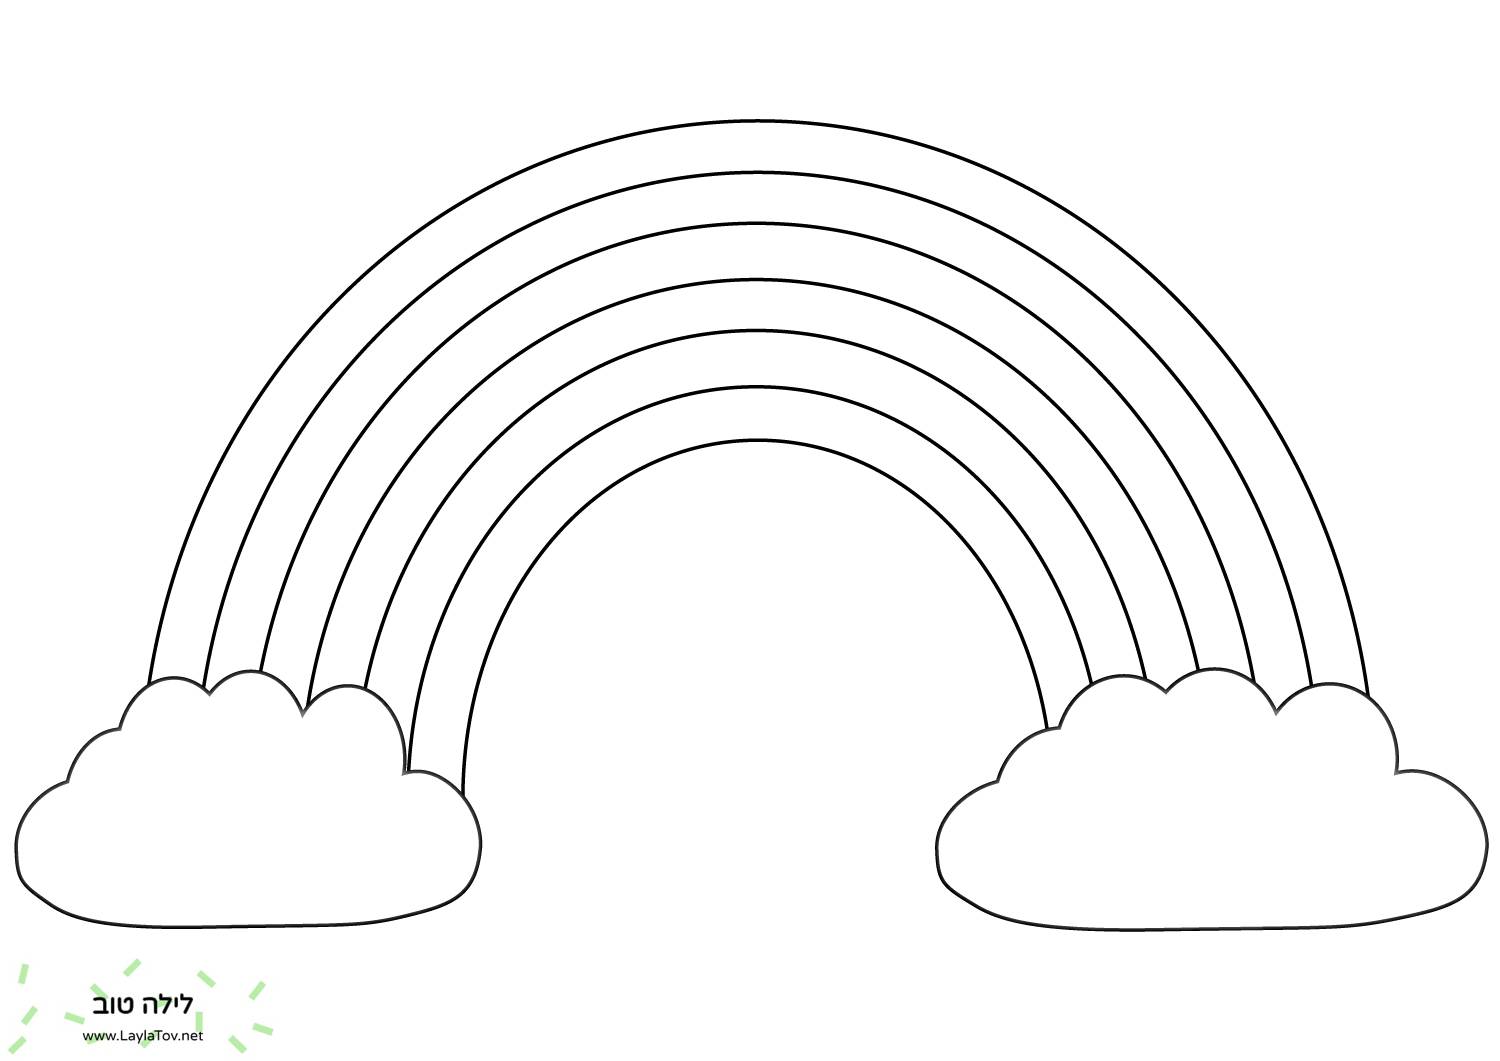 קשת בענן עם שני עננים